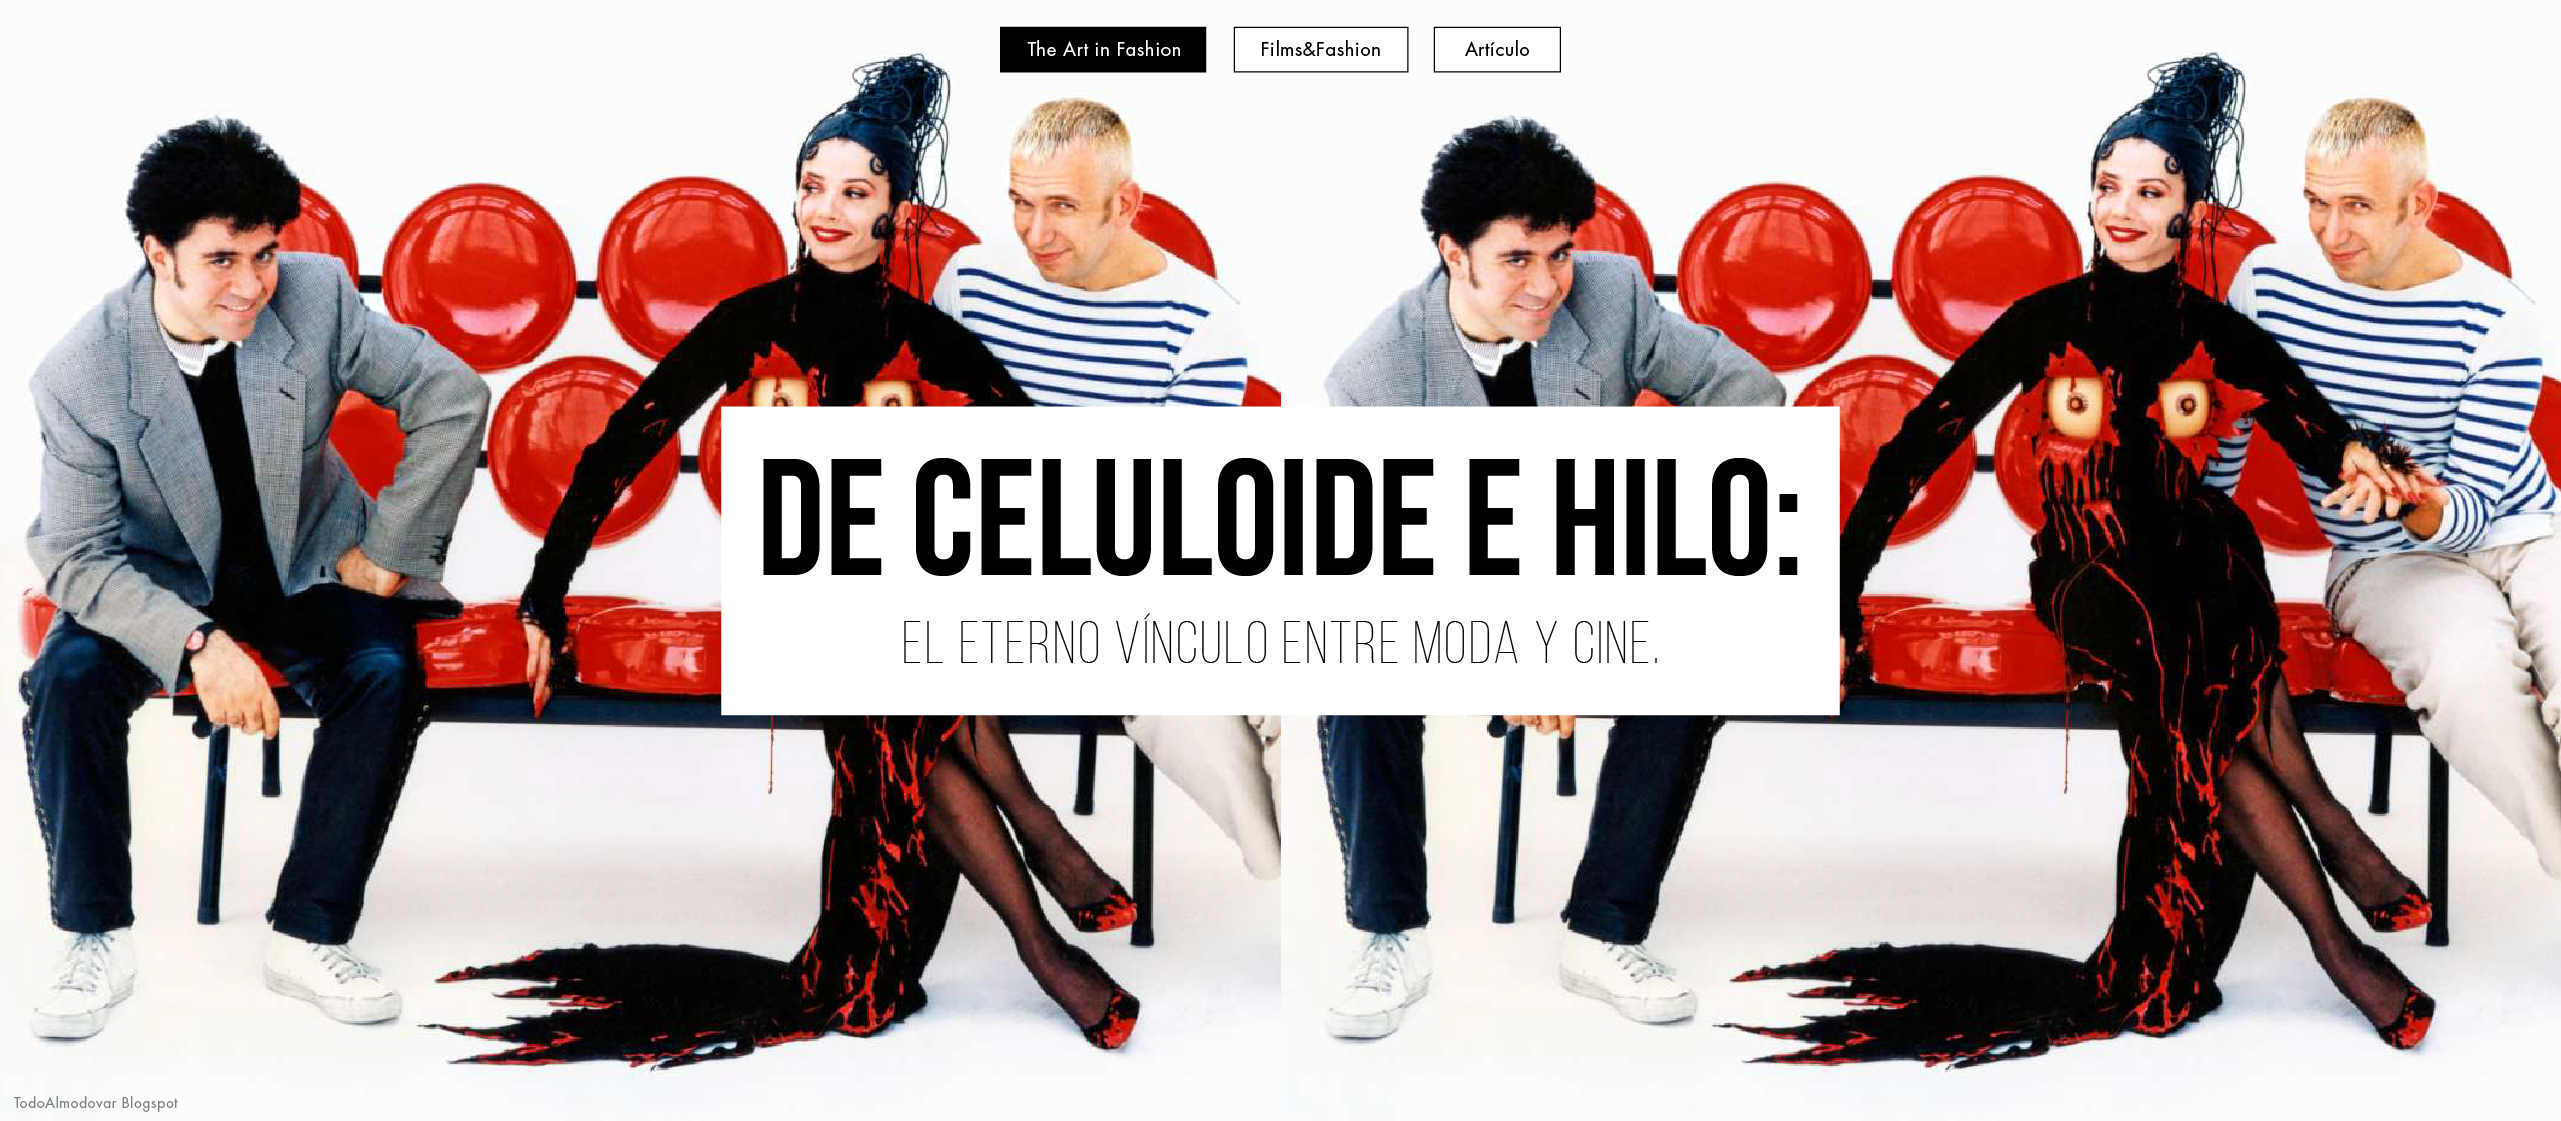 De celuloide e hilo: El eterno vínculo entre moda y cine